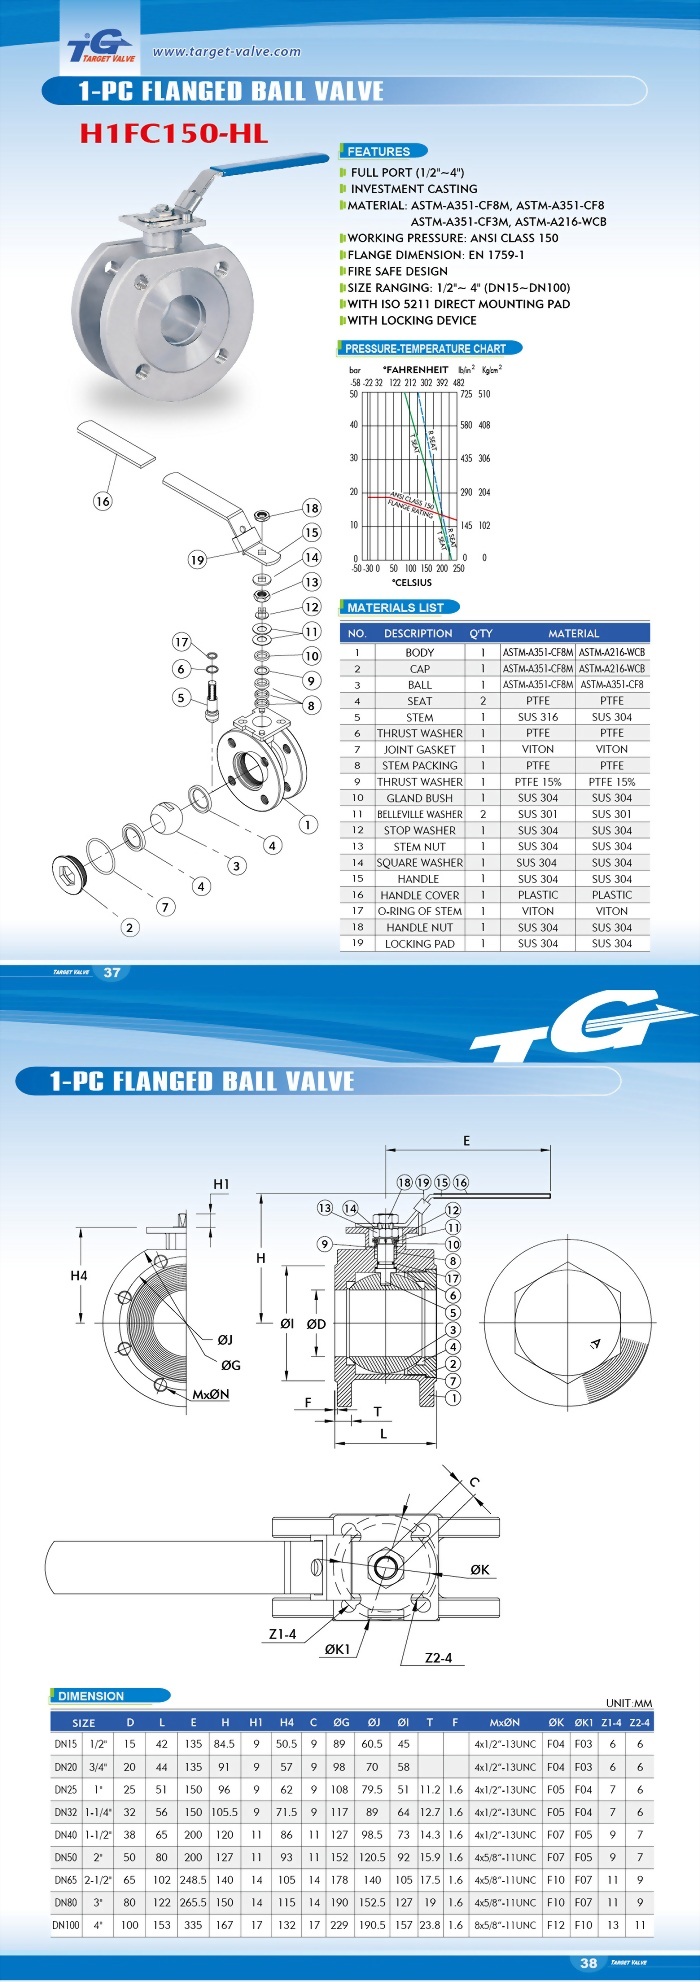 1 PC FLANGED BALL VALVE - H1FC150